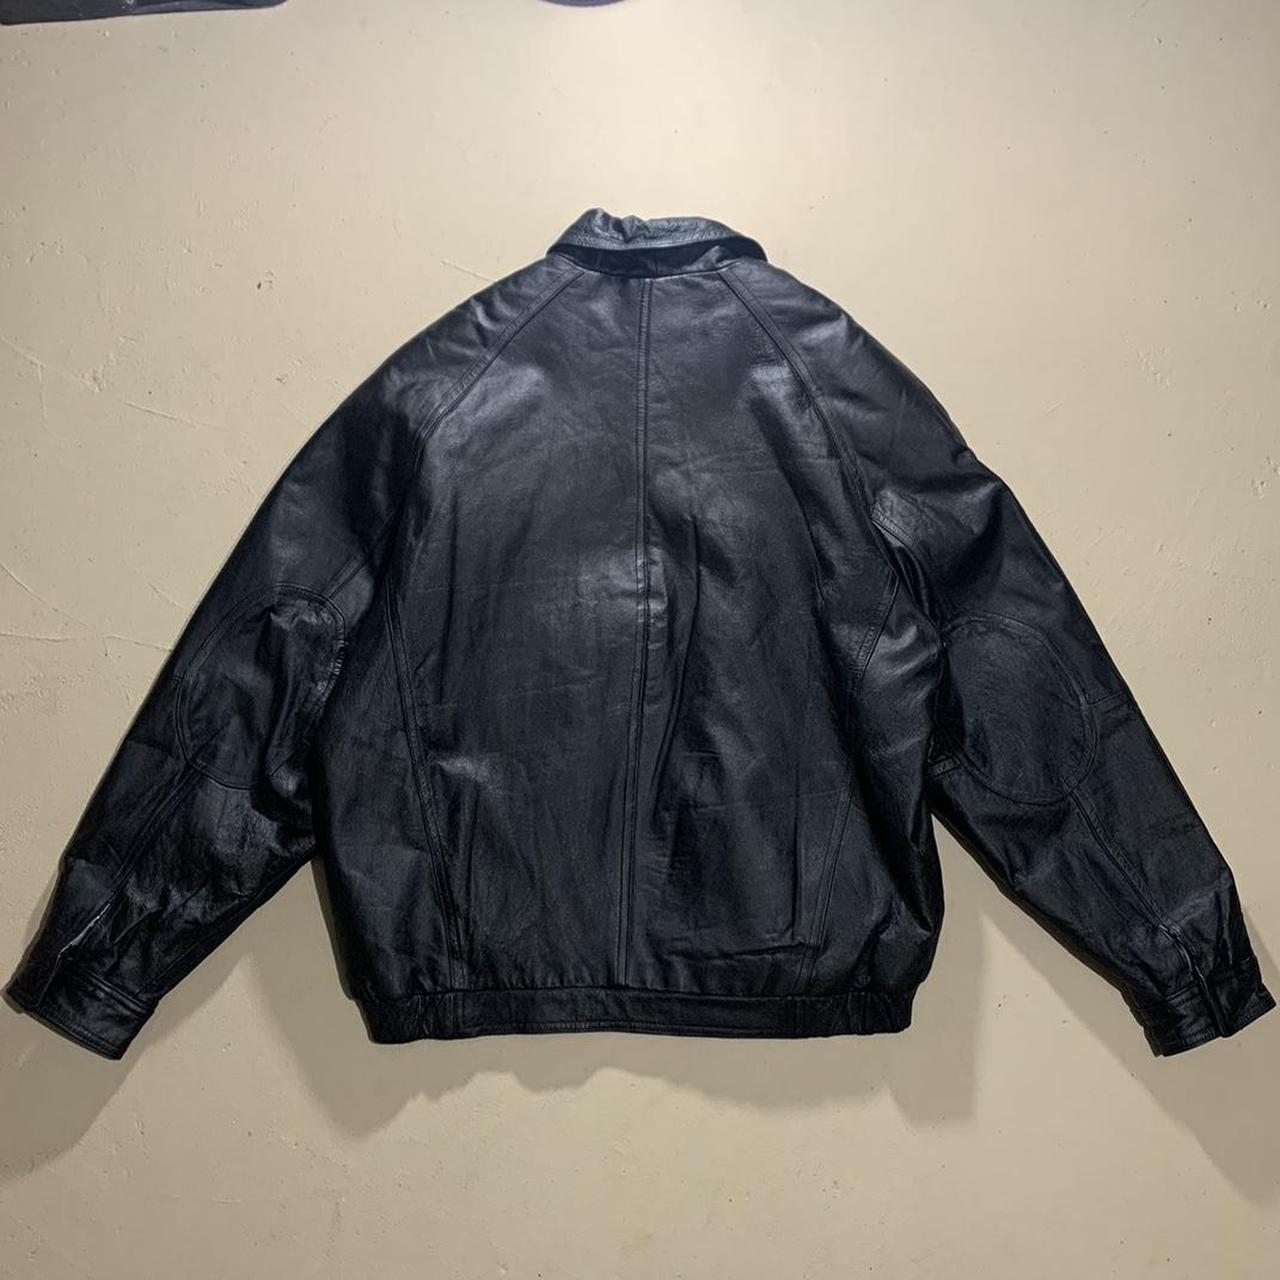 Vintage Joshua Ross Leather Jacket Size - L Pit To... - Depop